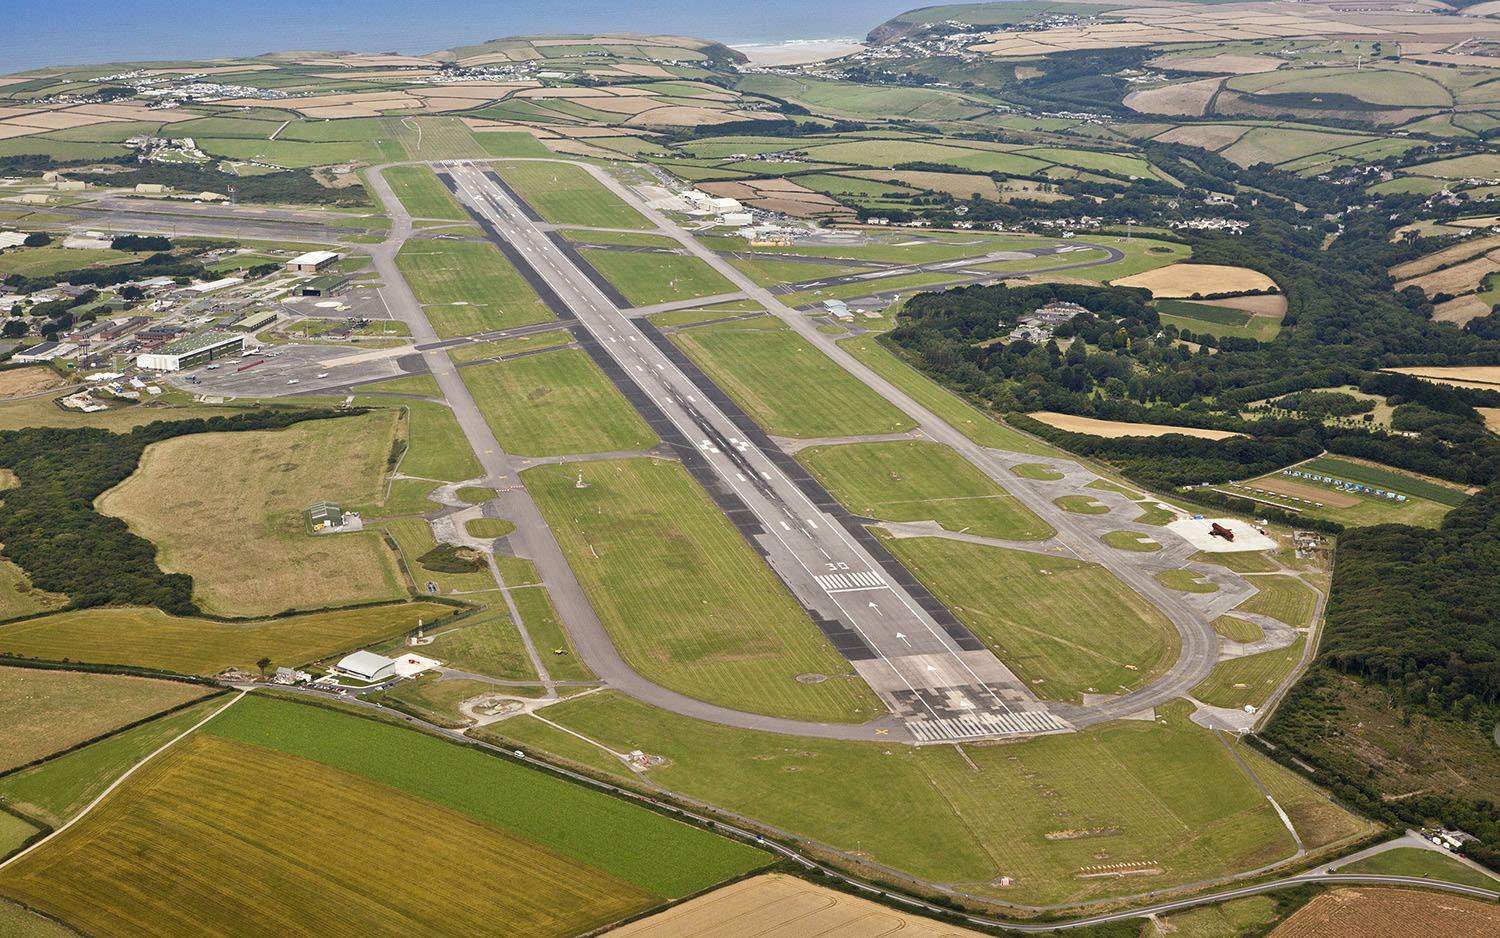 Aerial shot of the runway at Spaceport Cornwall